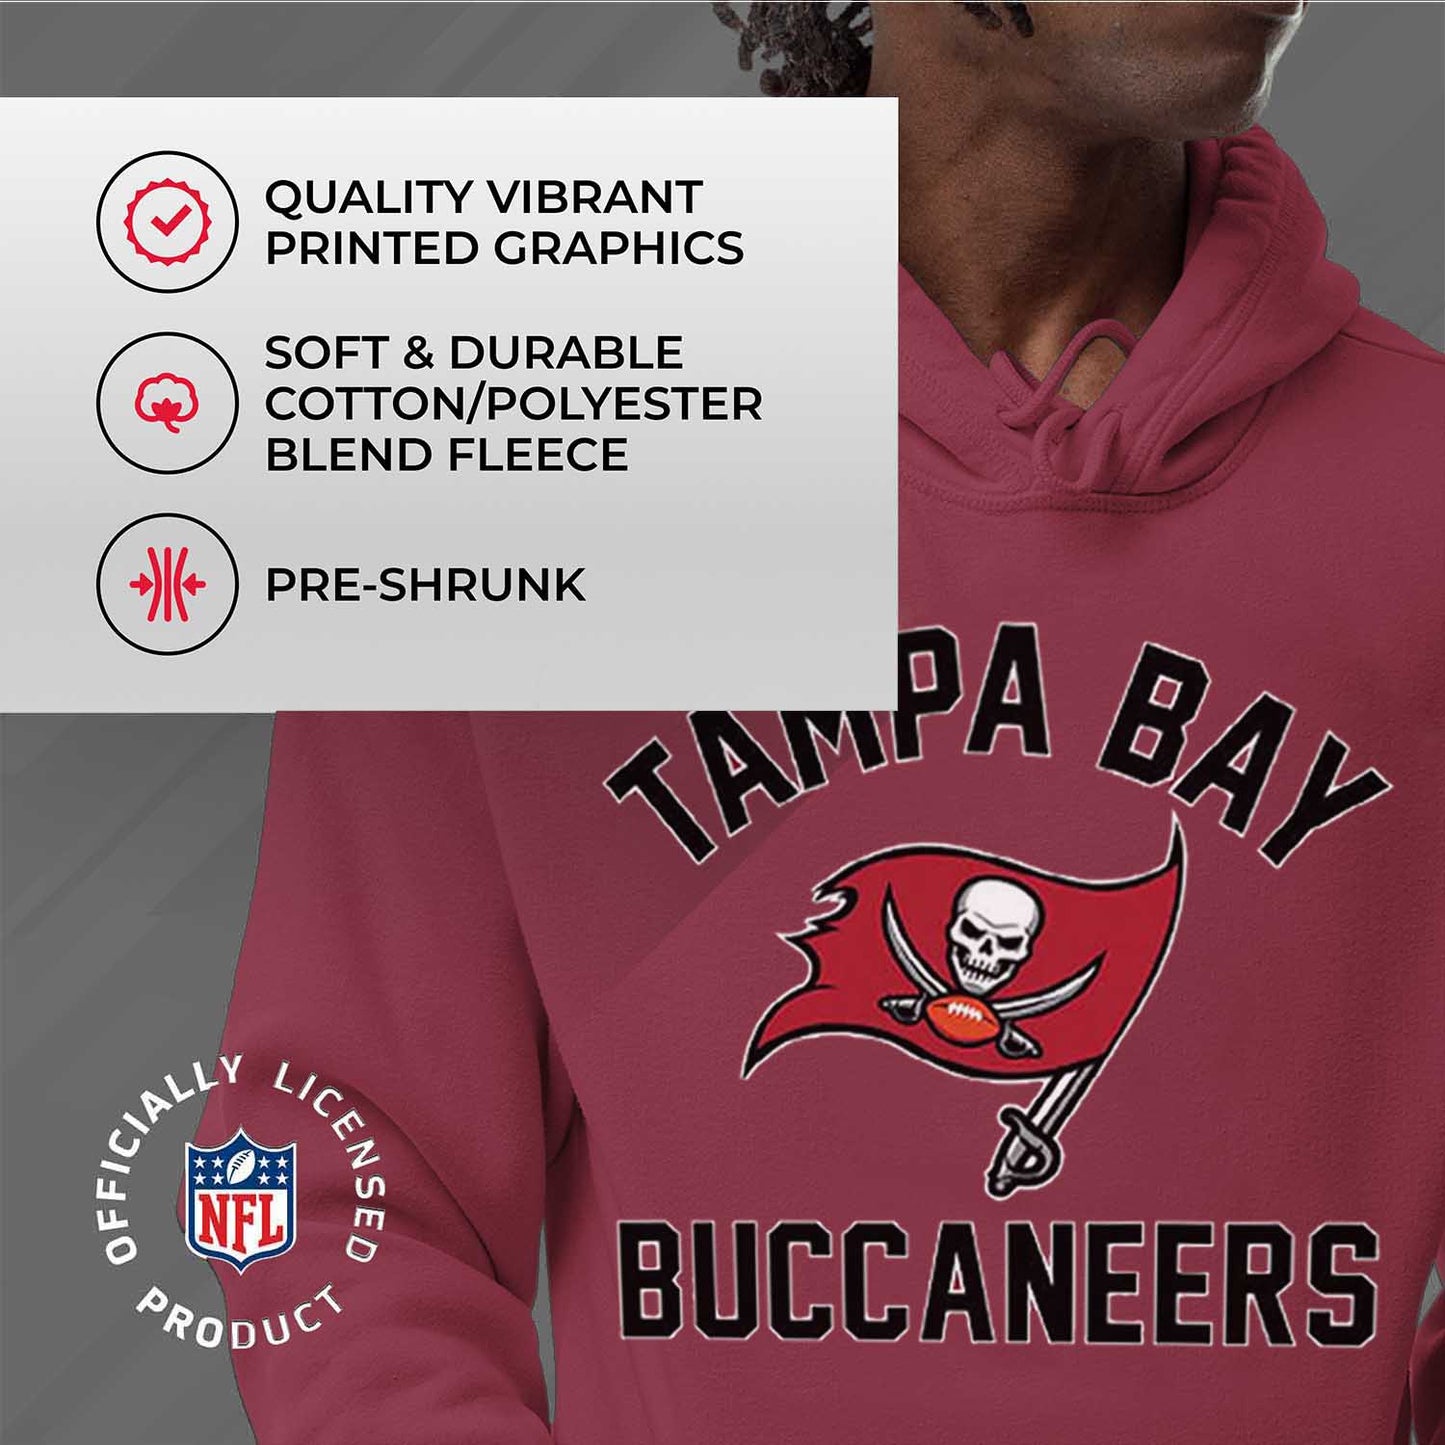 Tampa Bay Buccaneers NFL Adult Gameday Hooded Sweatshirt - Cardinal